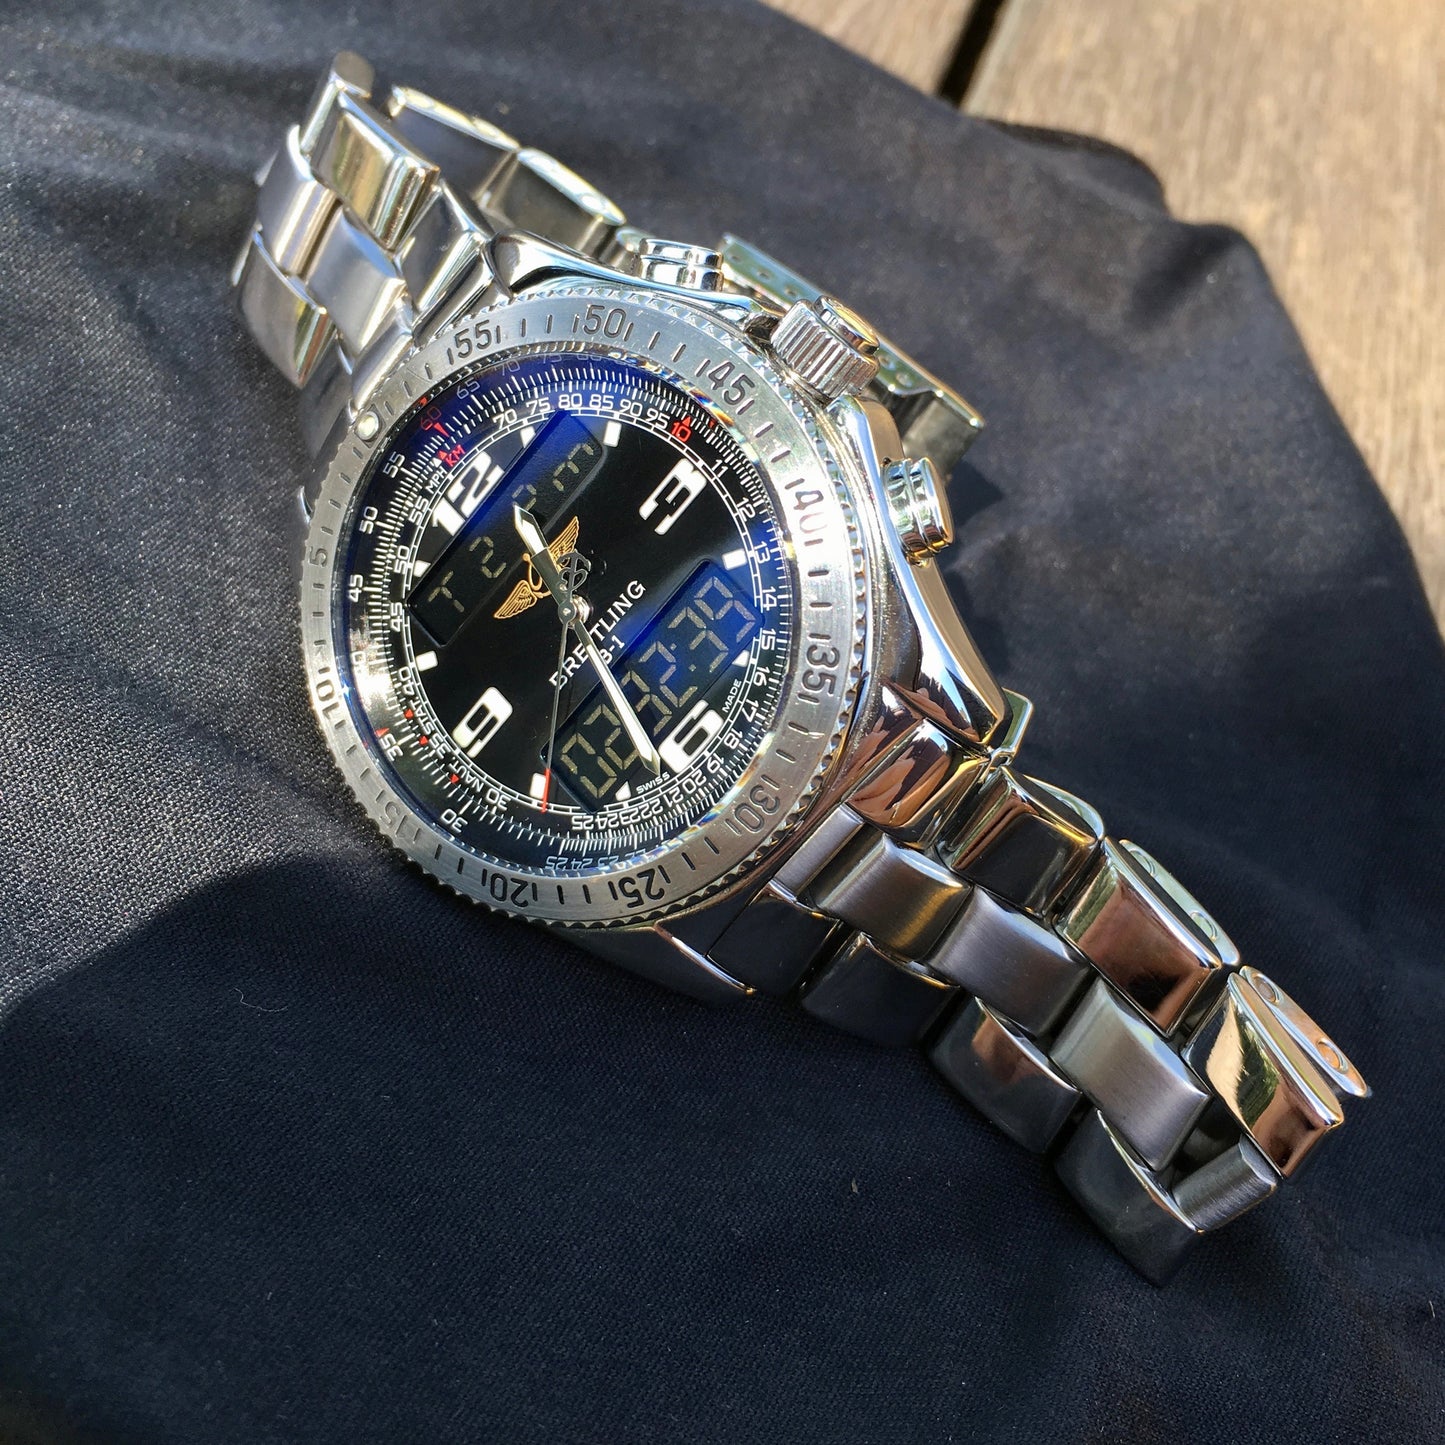 Breitling B-1 A68362 Stainless Steel Digital Analog Black Chronograph Wristwatch - Hashtag Watch Company